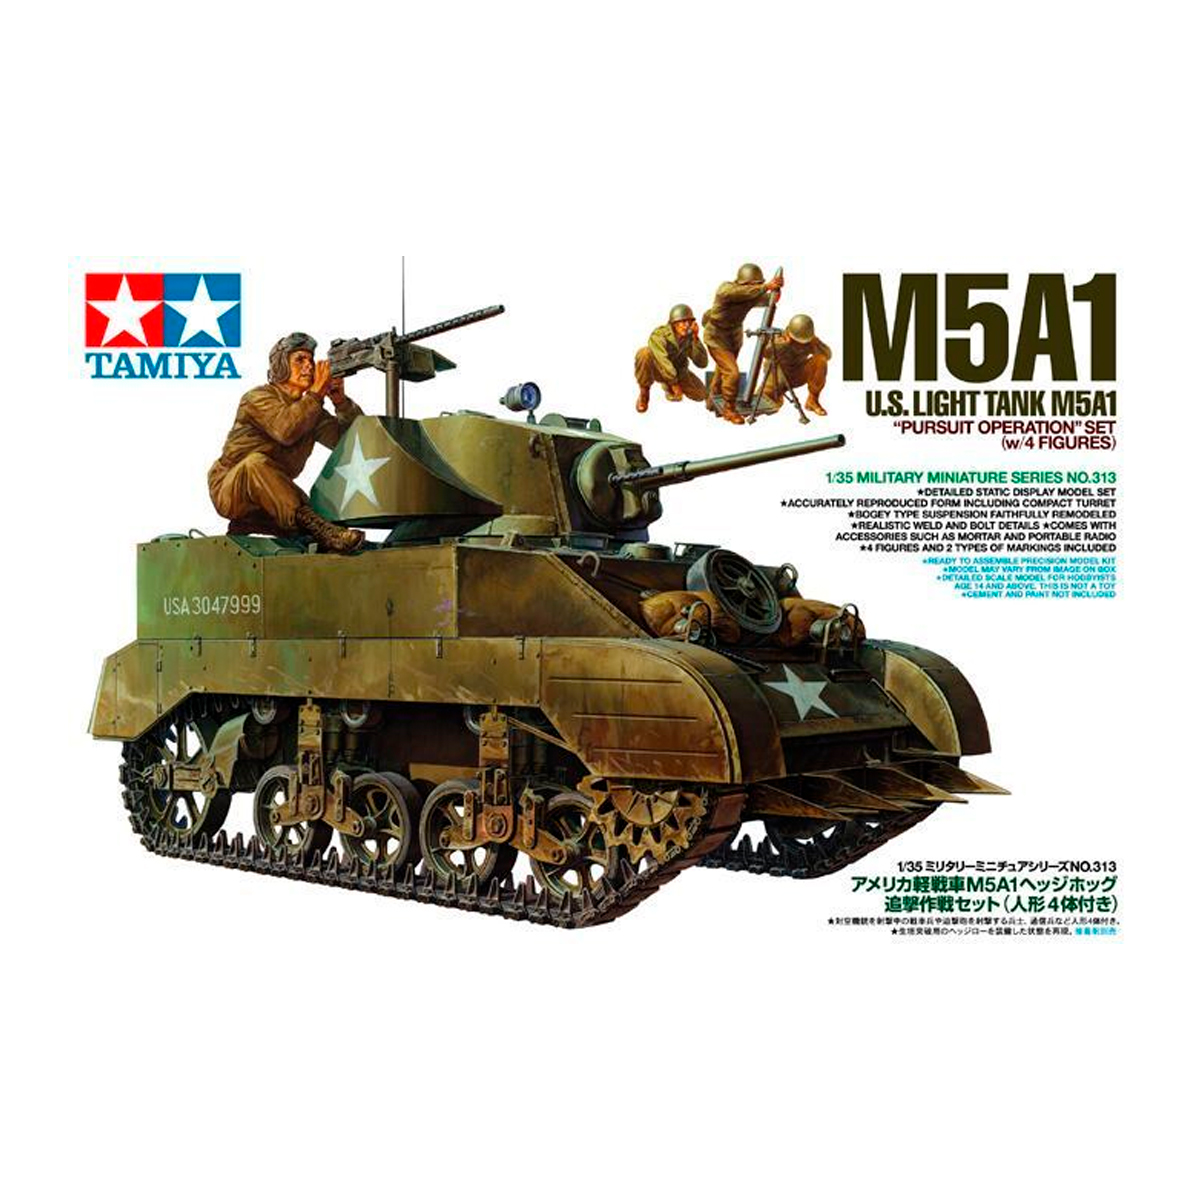 1/35 U.S. Light Tank M5A1 Pursuit Operation Set